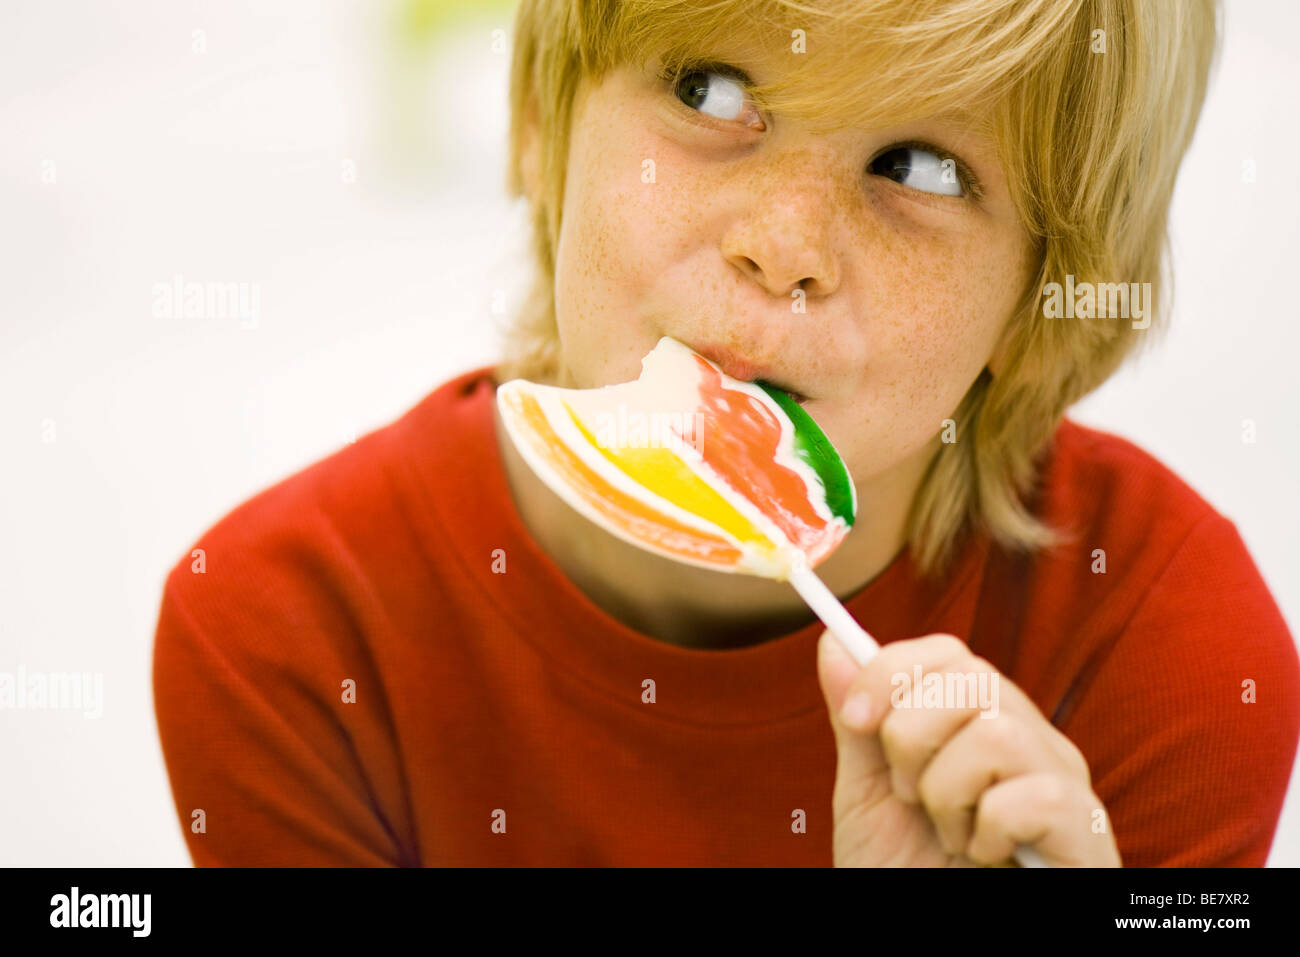 Boy eating lollipop Stock Photo